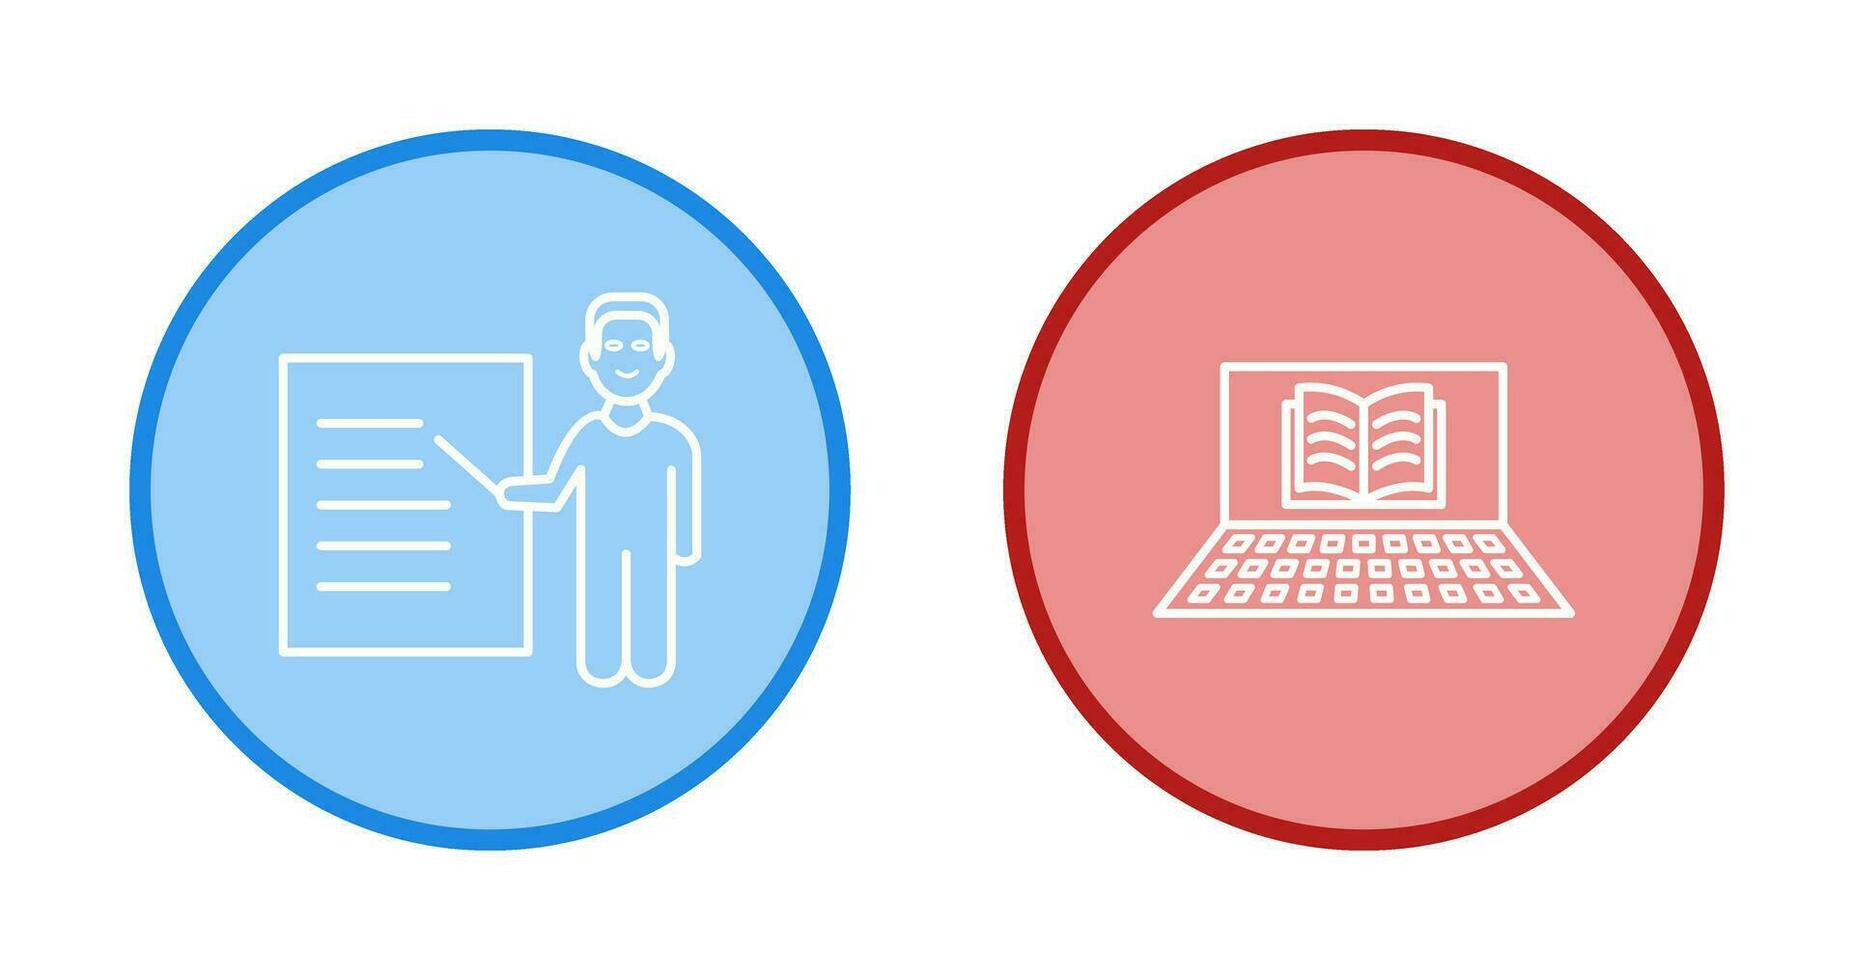 Online Books and Male Presenter Icon vector